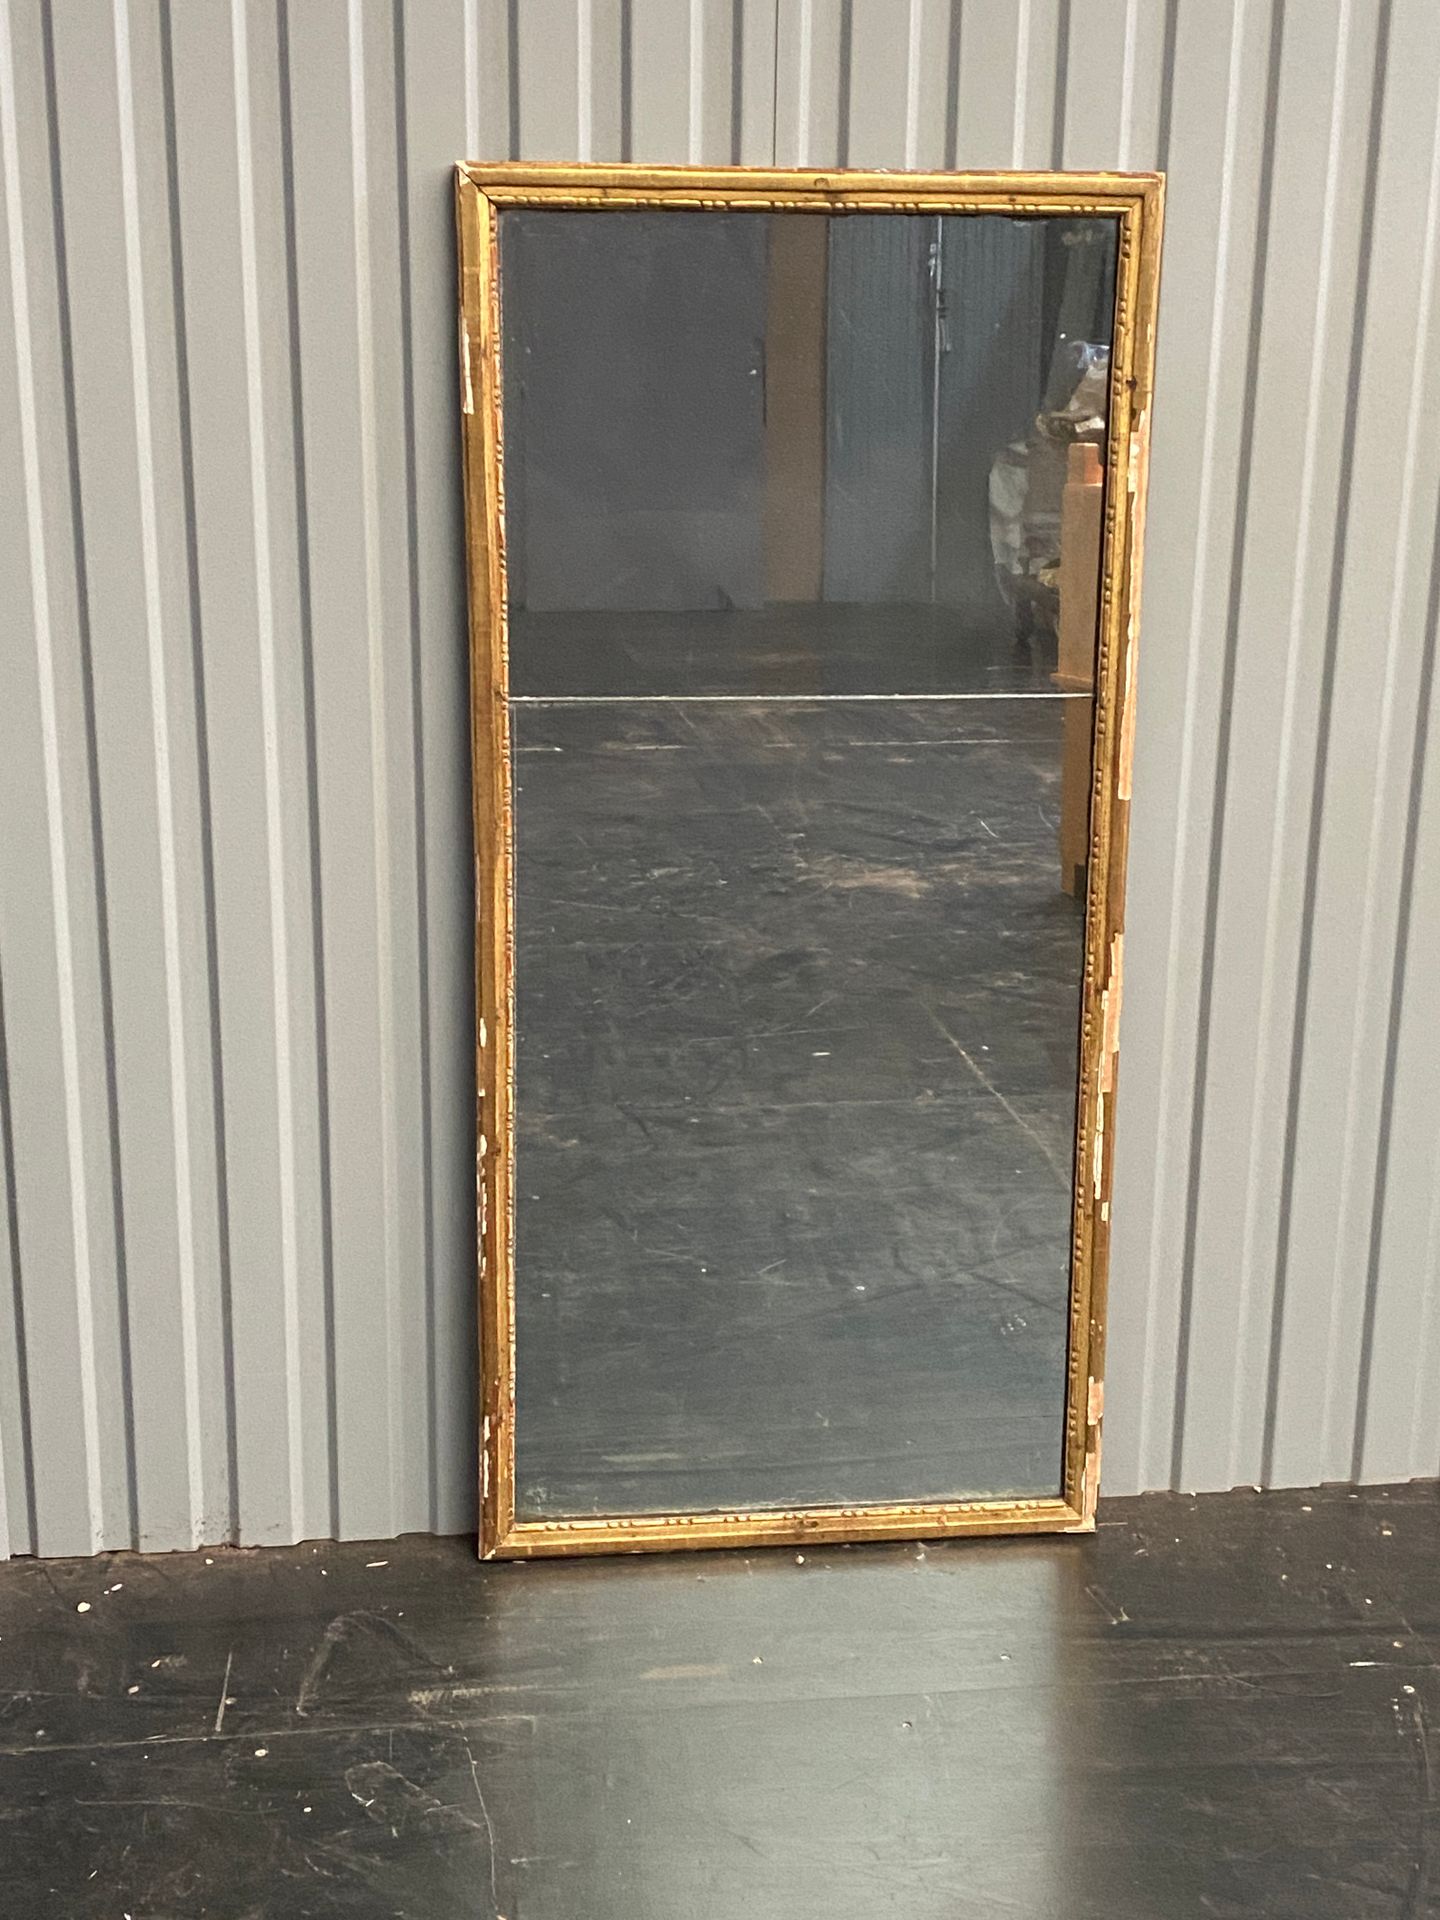 Null Espejo rectangular con marco dorado

Accidentes

H : 136 - W : 64 cm